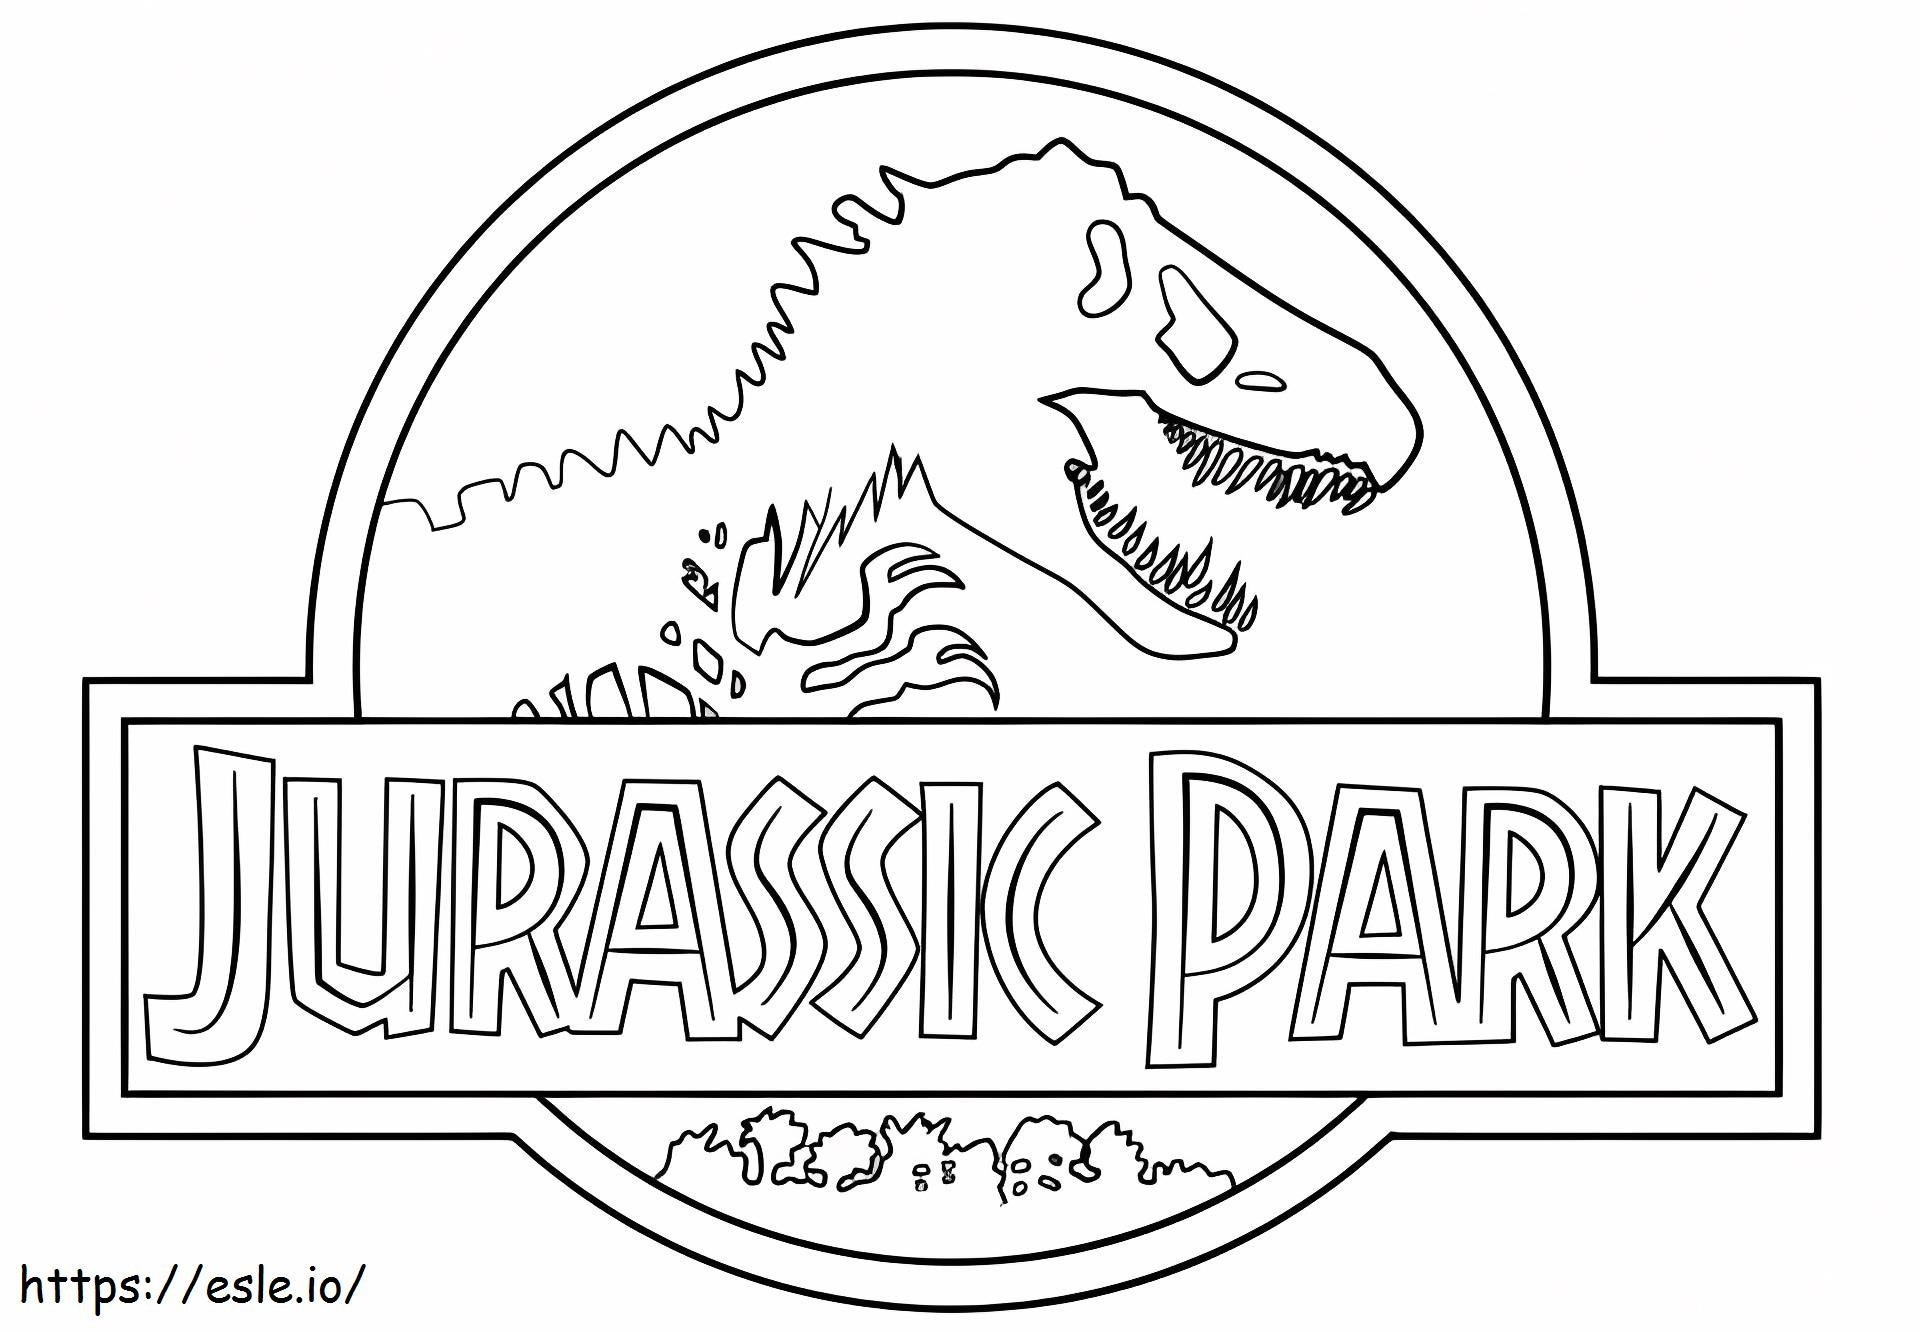 Jurassic Park-logo kleurplaat kleurplaat